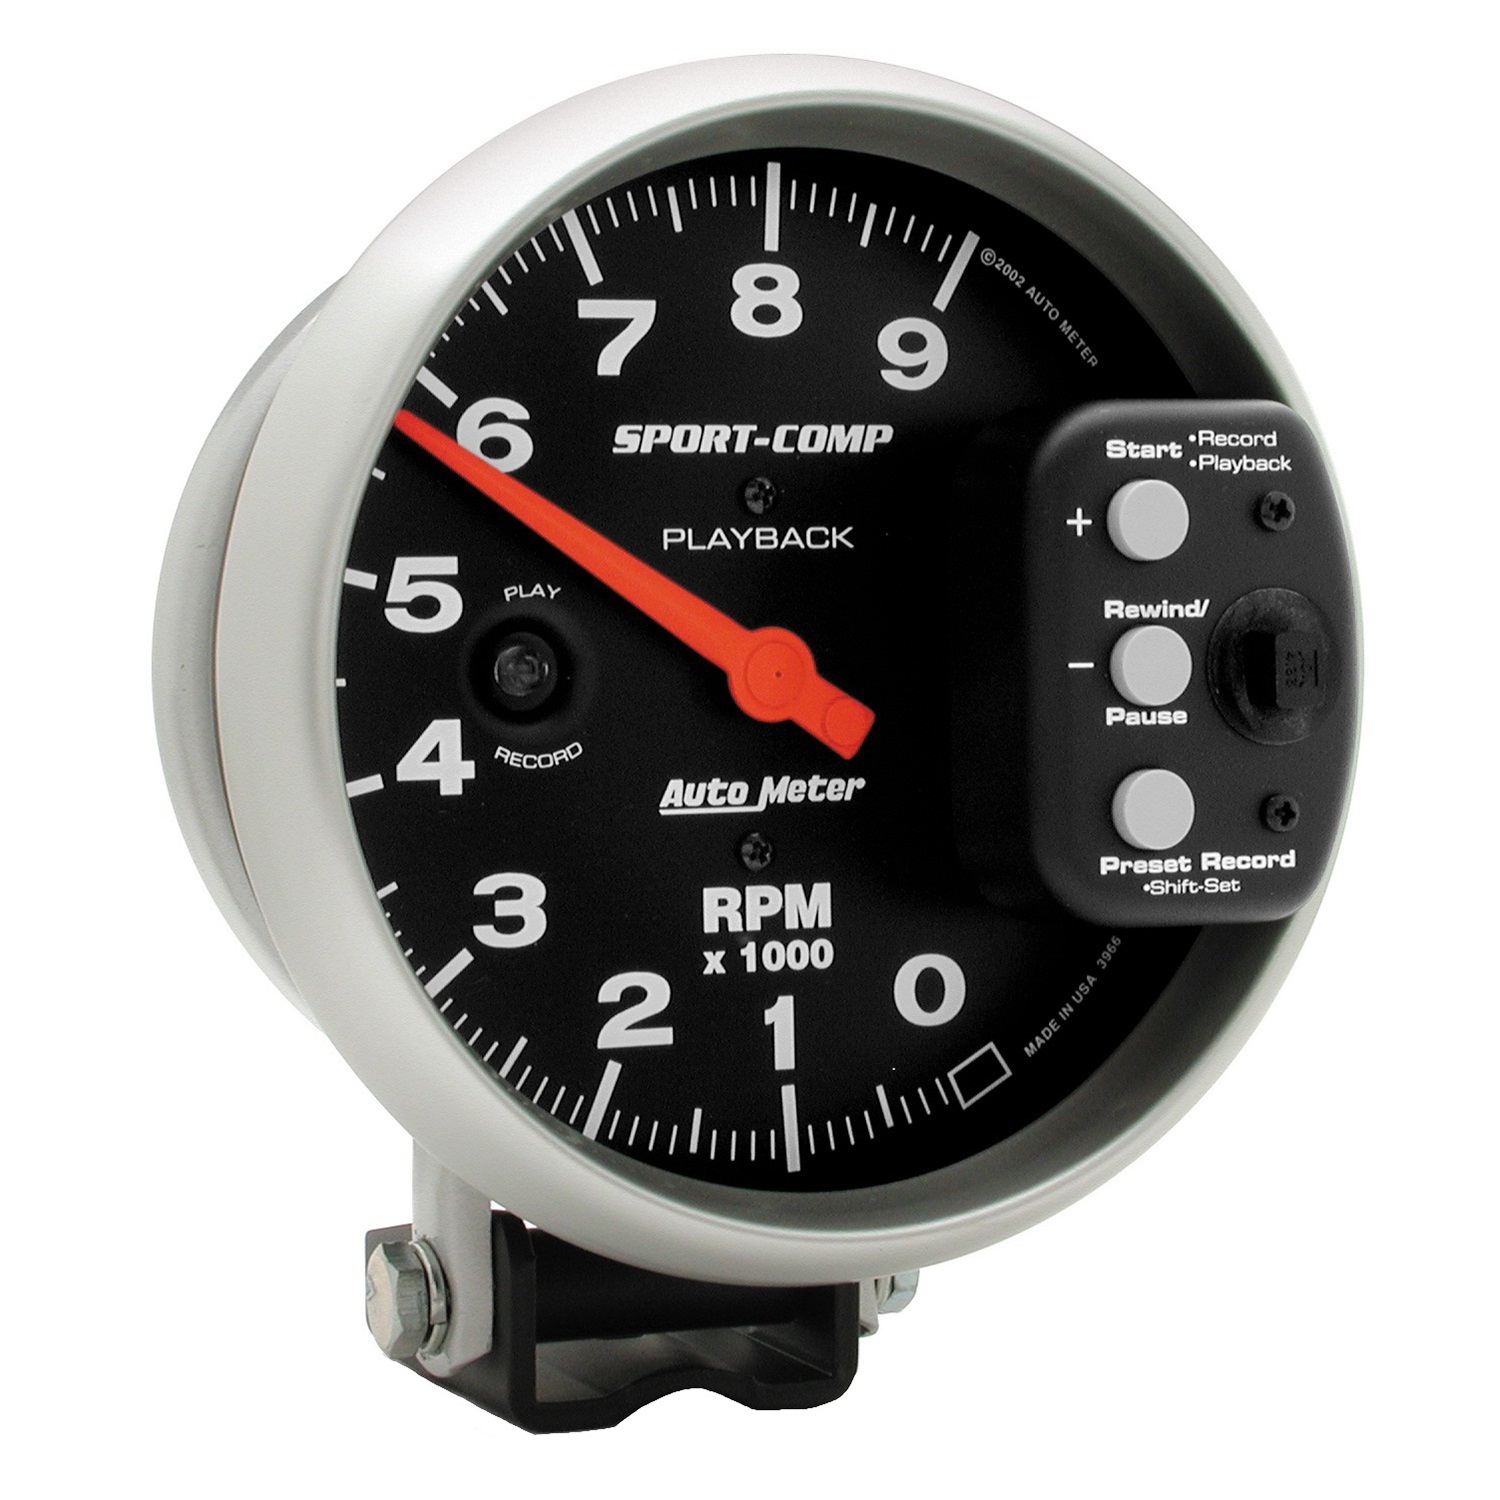 Auto Meter Auto Meter 3966 Sport-Comp; Playback Tachometer